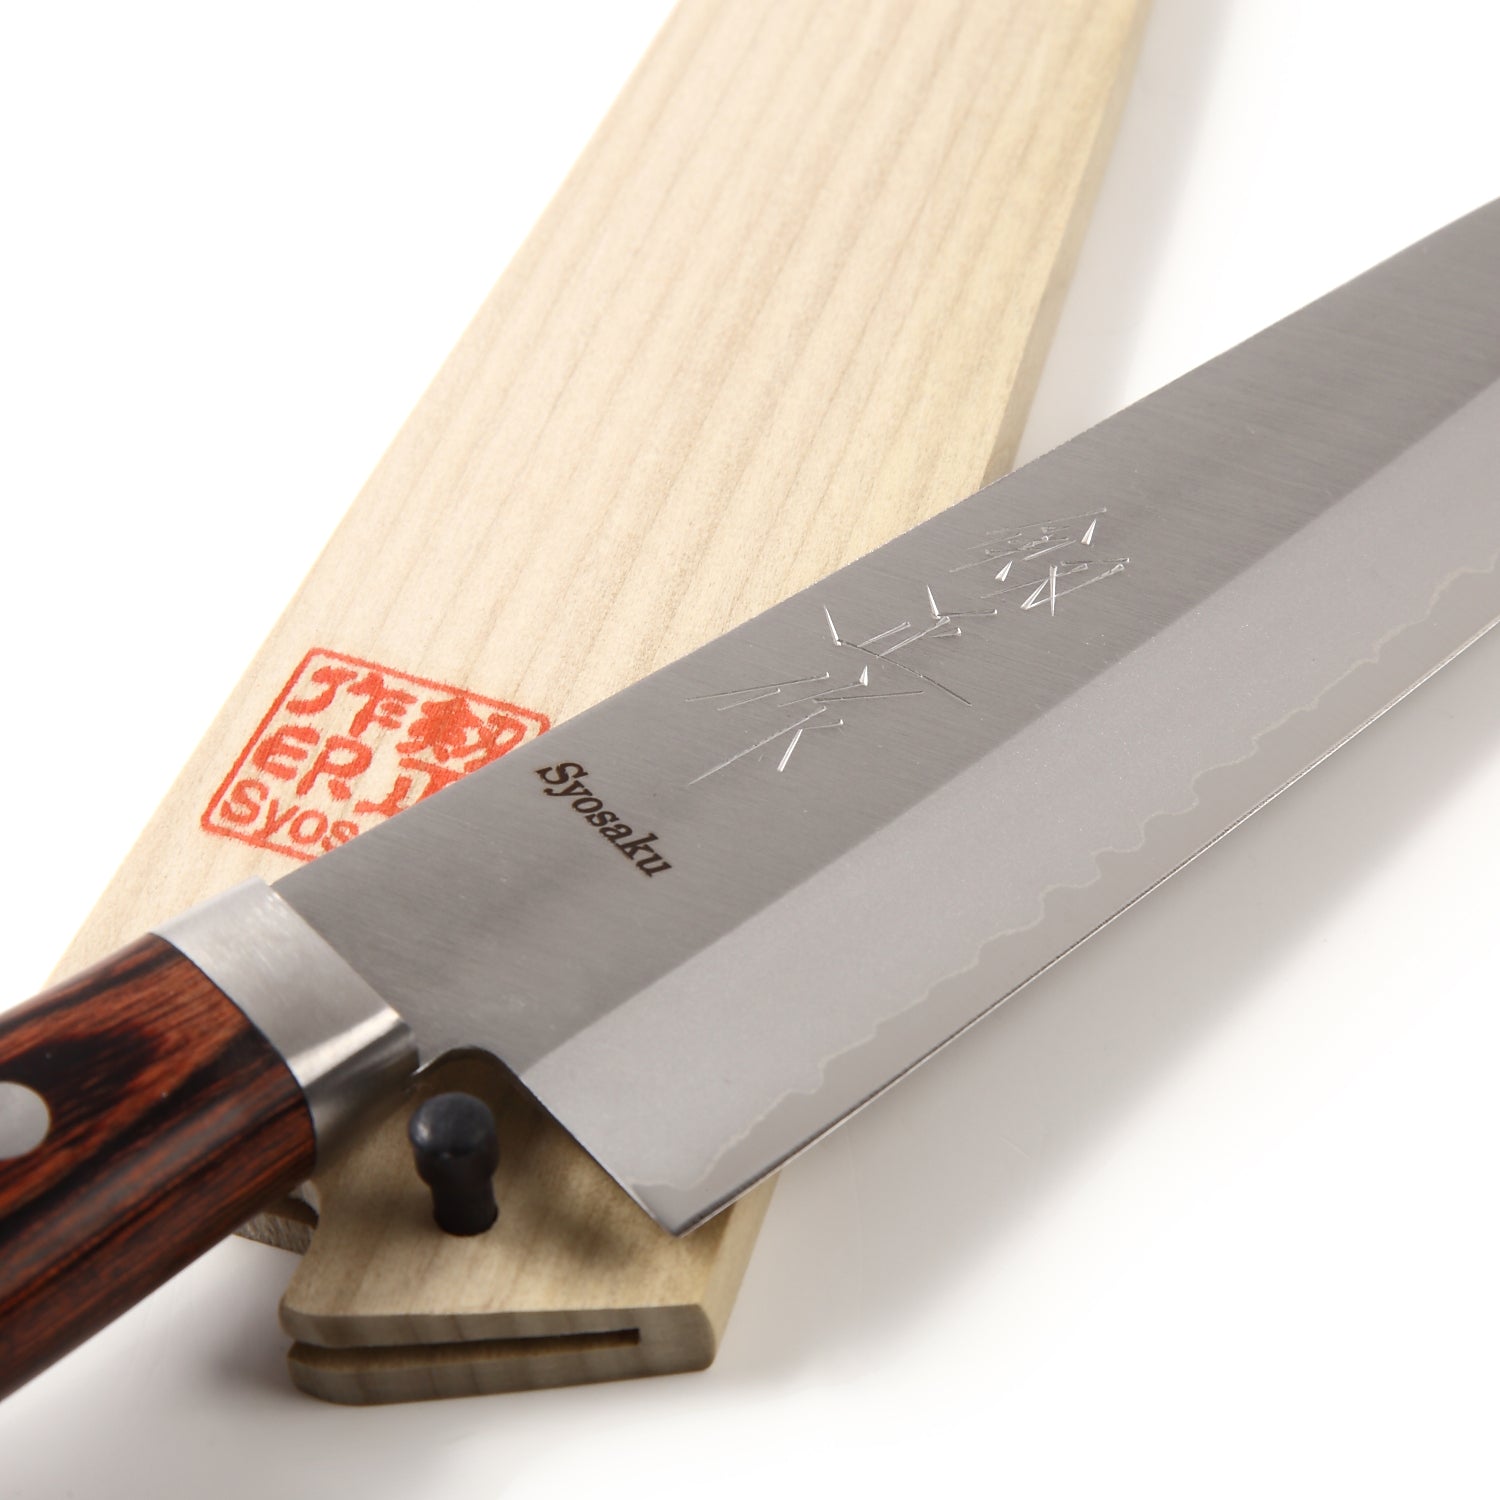 Syosaku Japanese Best Sharp Kitchen Chef Knife VG-1 Gold Stainless Steel Mahogany Handle, Gyuto 7-inch (180mm) with Magnolia Wood Sheath Saya Cover - Syosaku-Japan